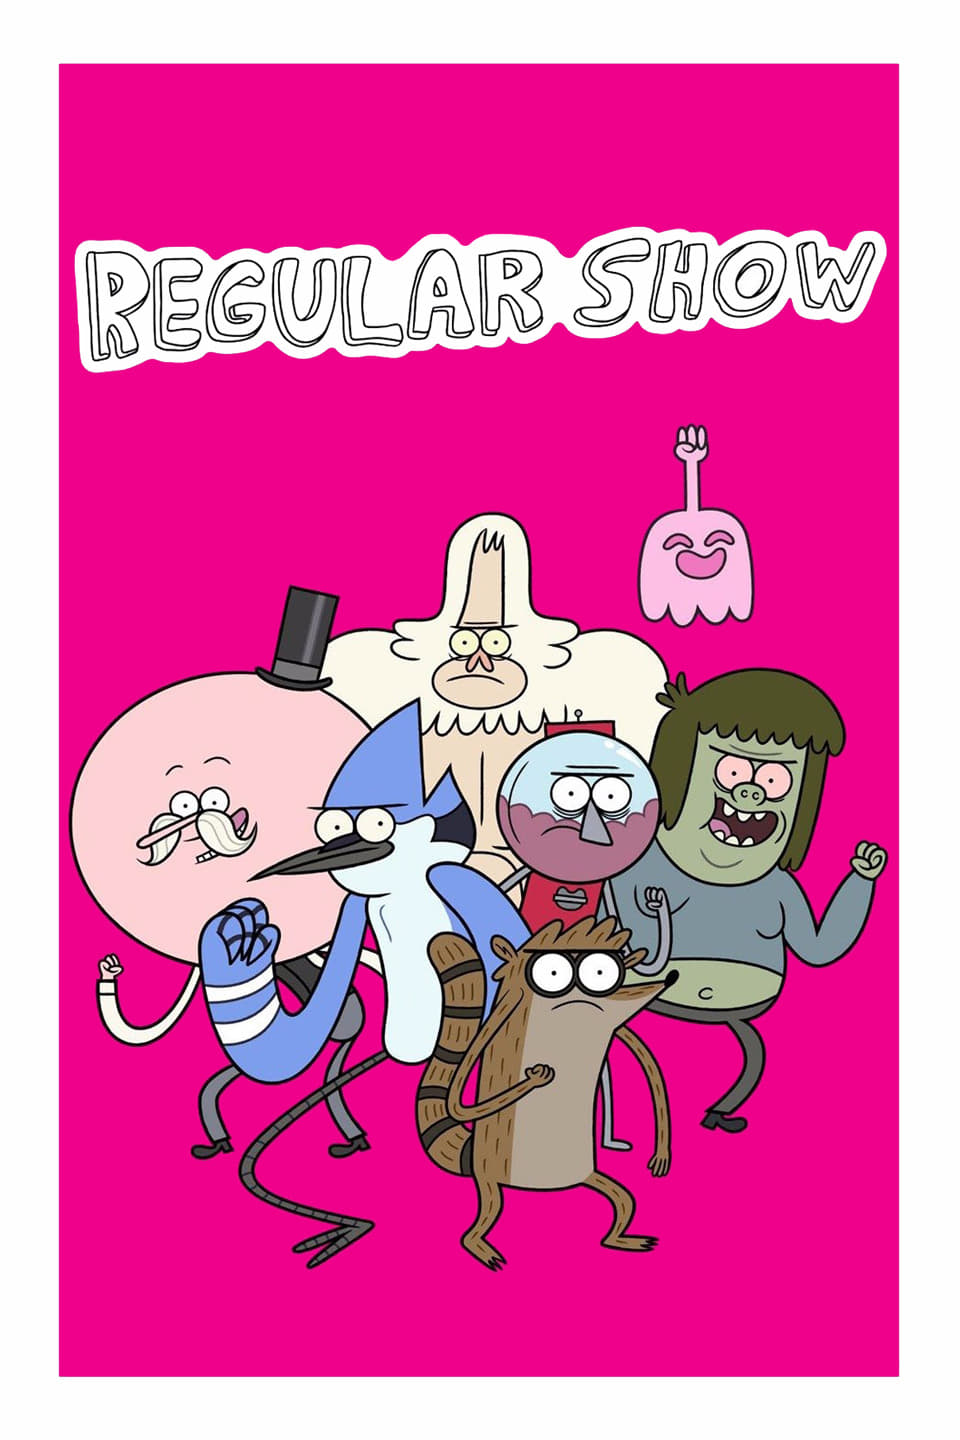 Regular Show (TV Series 2010–2017) - IMDb